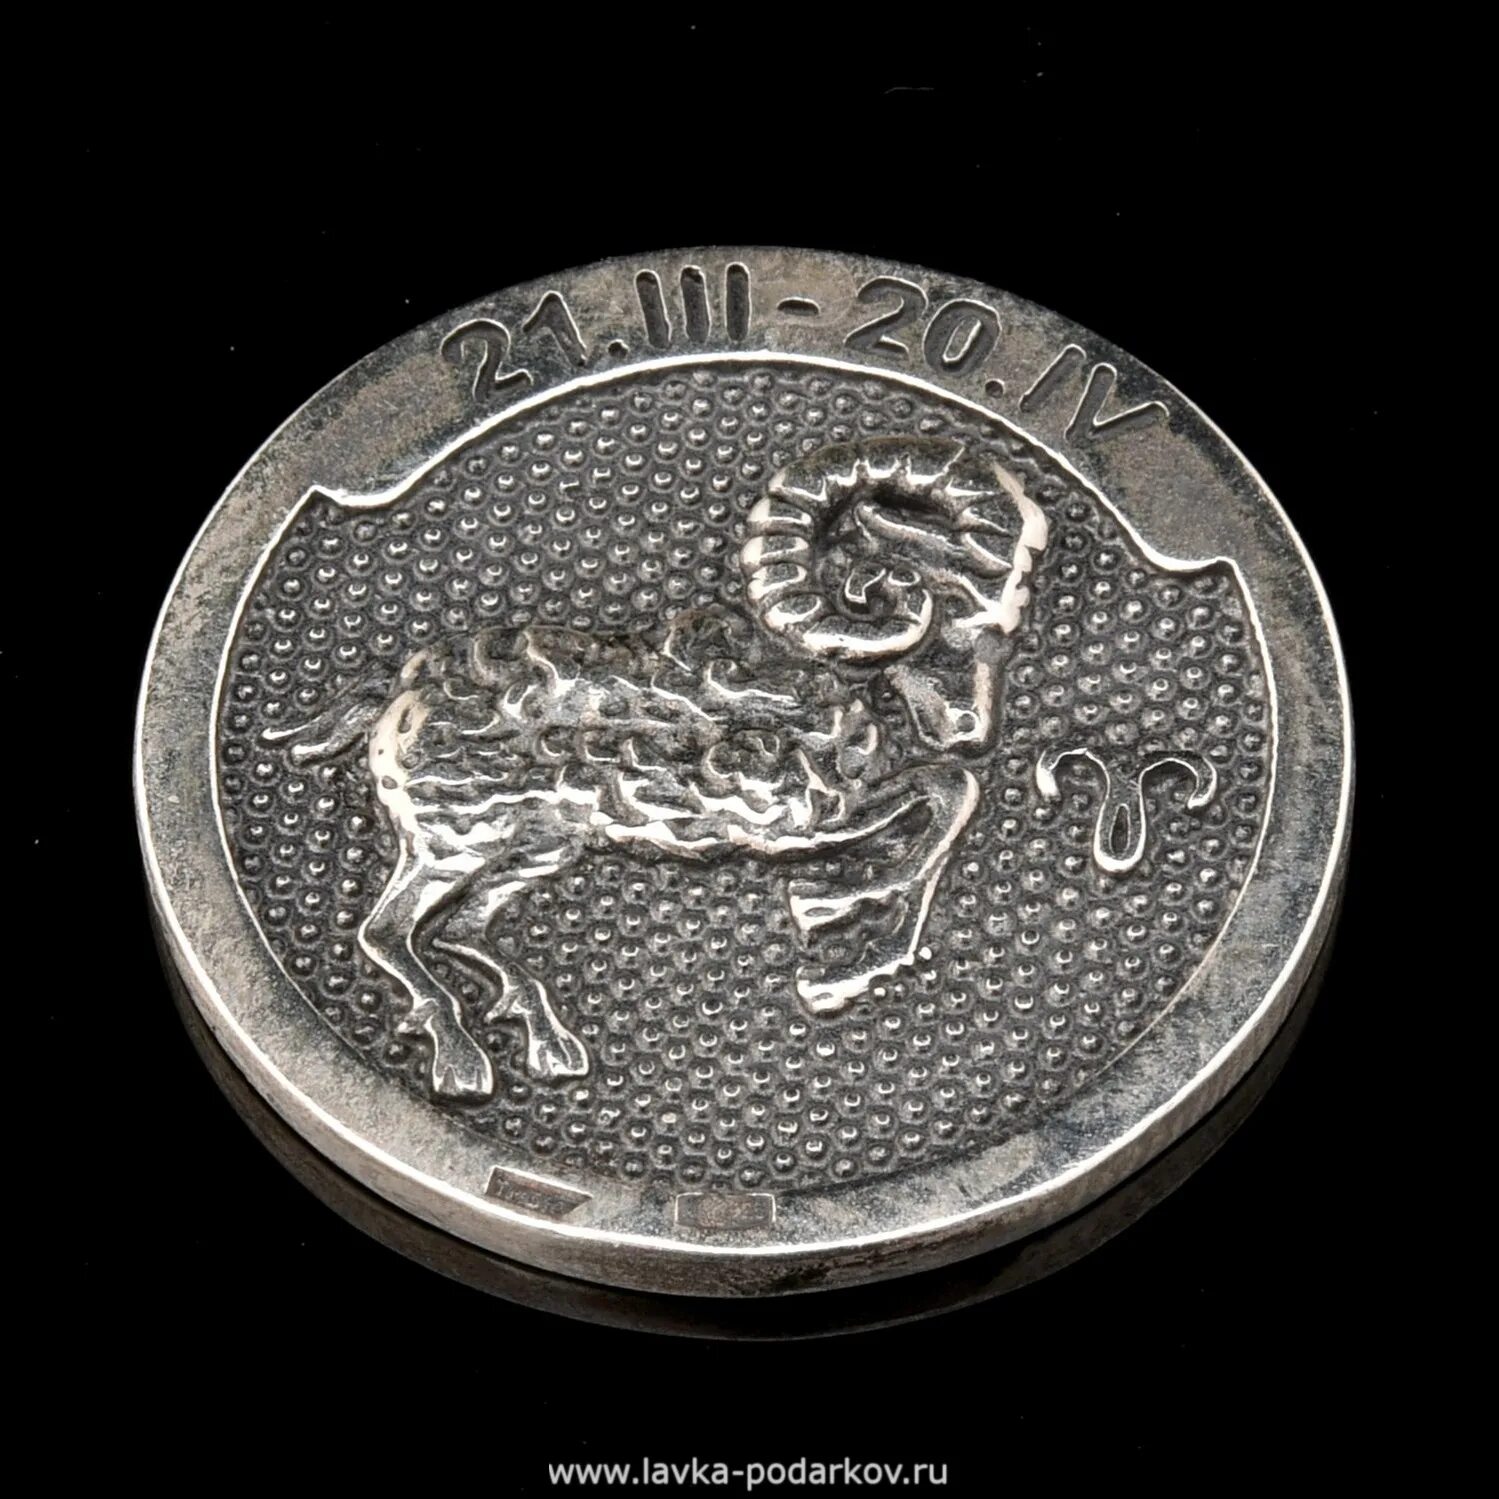 Серебряная монета Овен. Серебряная монета со знаком зодиака. Серебряная монета Зодиак. Серебряные сувенирные монеты.